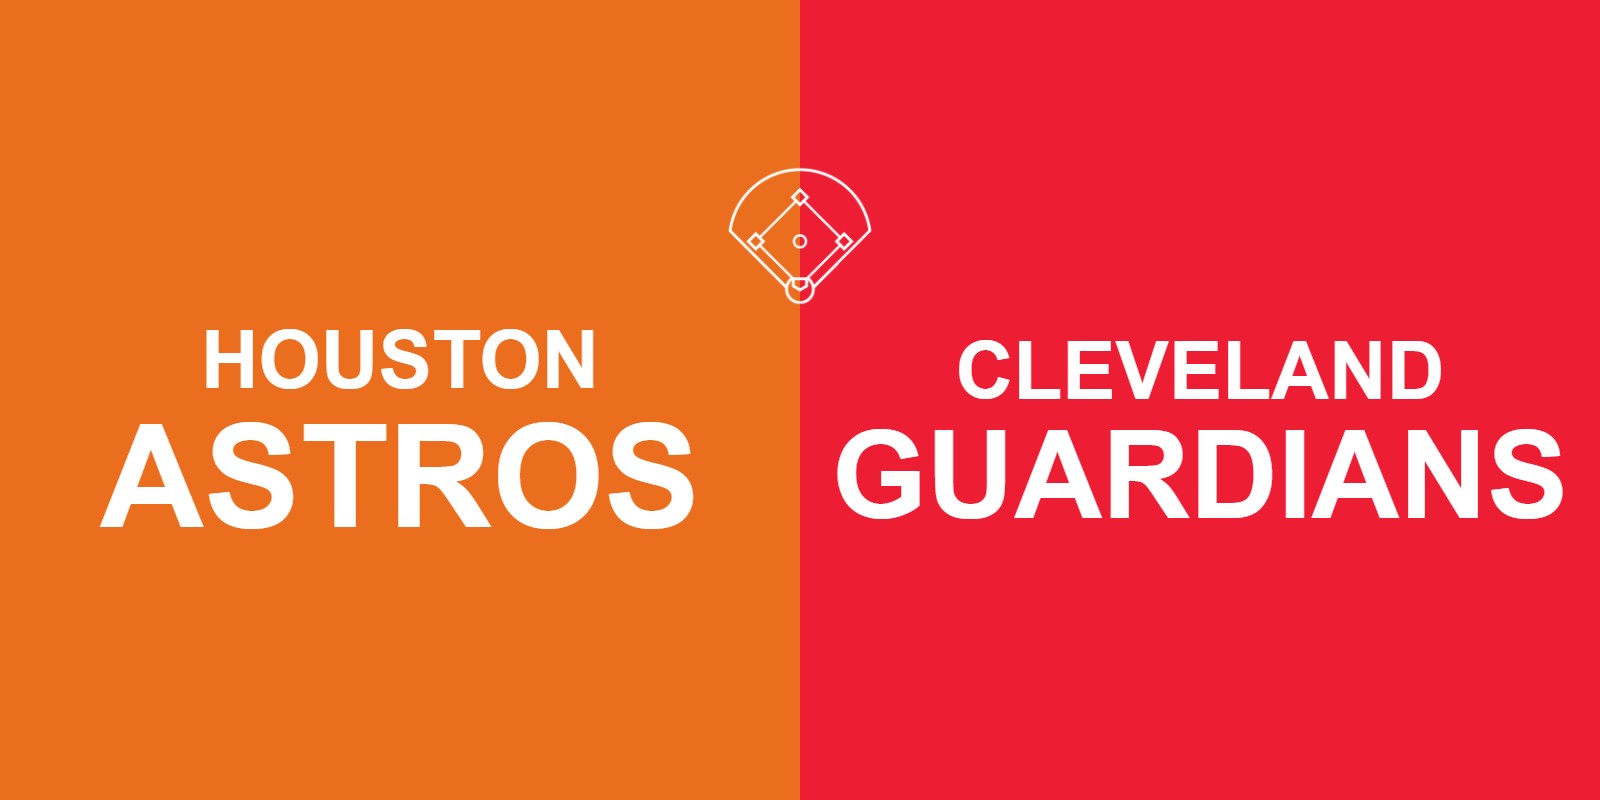 Astros vs Guardians